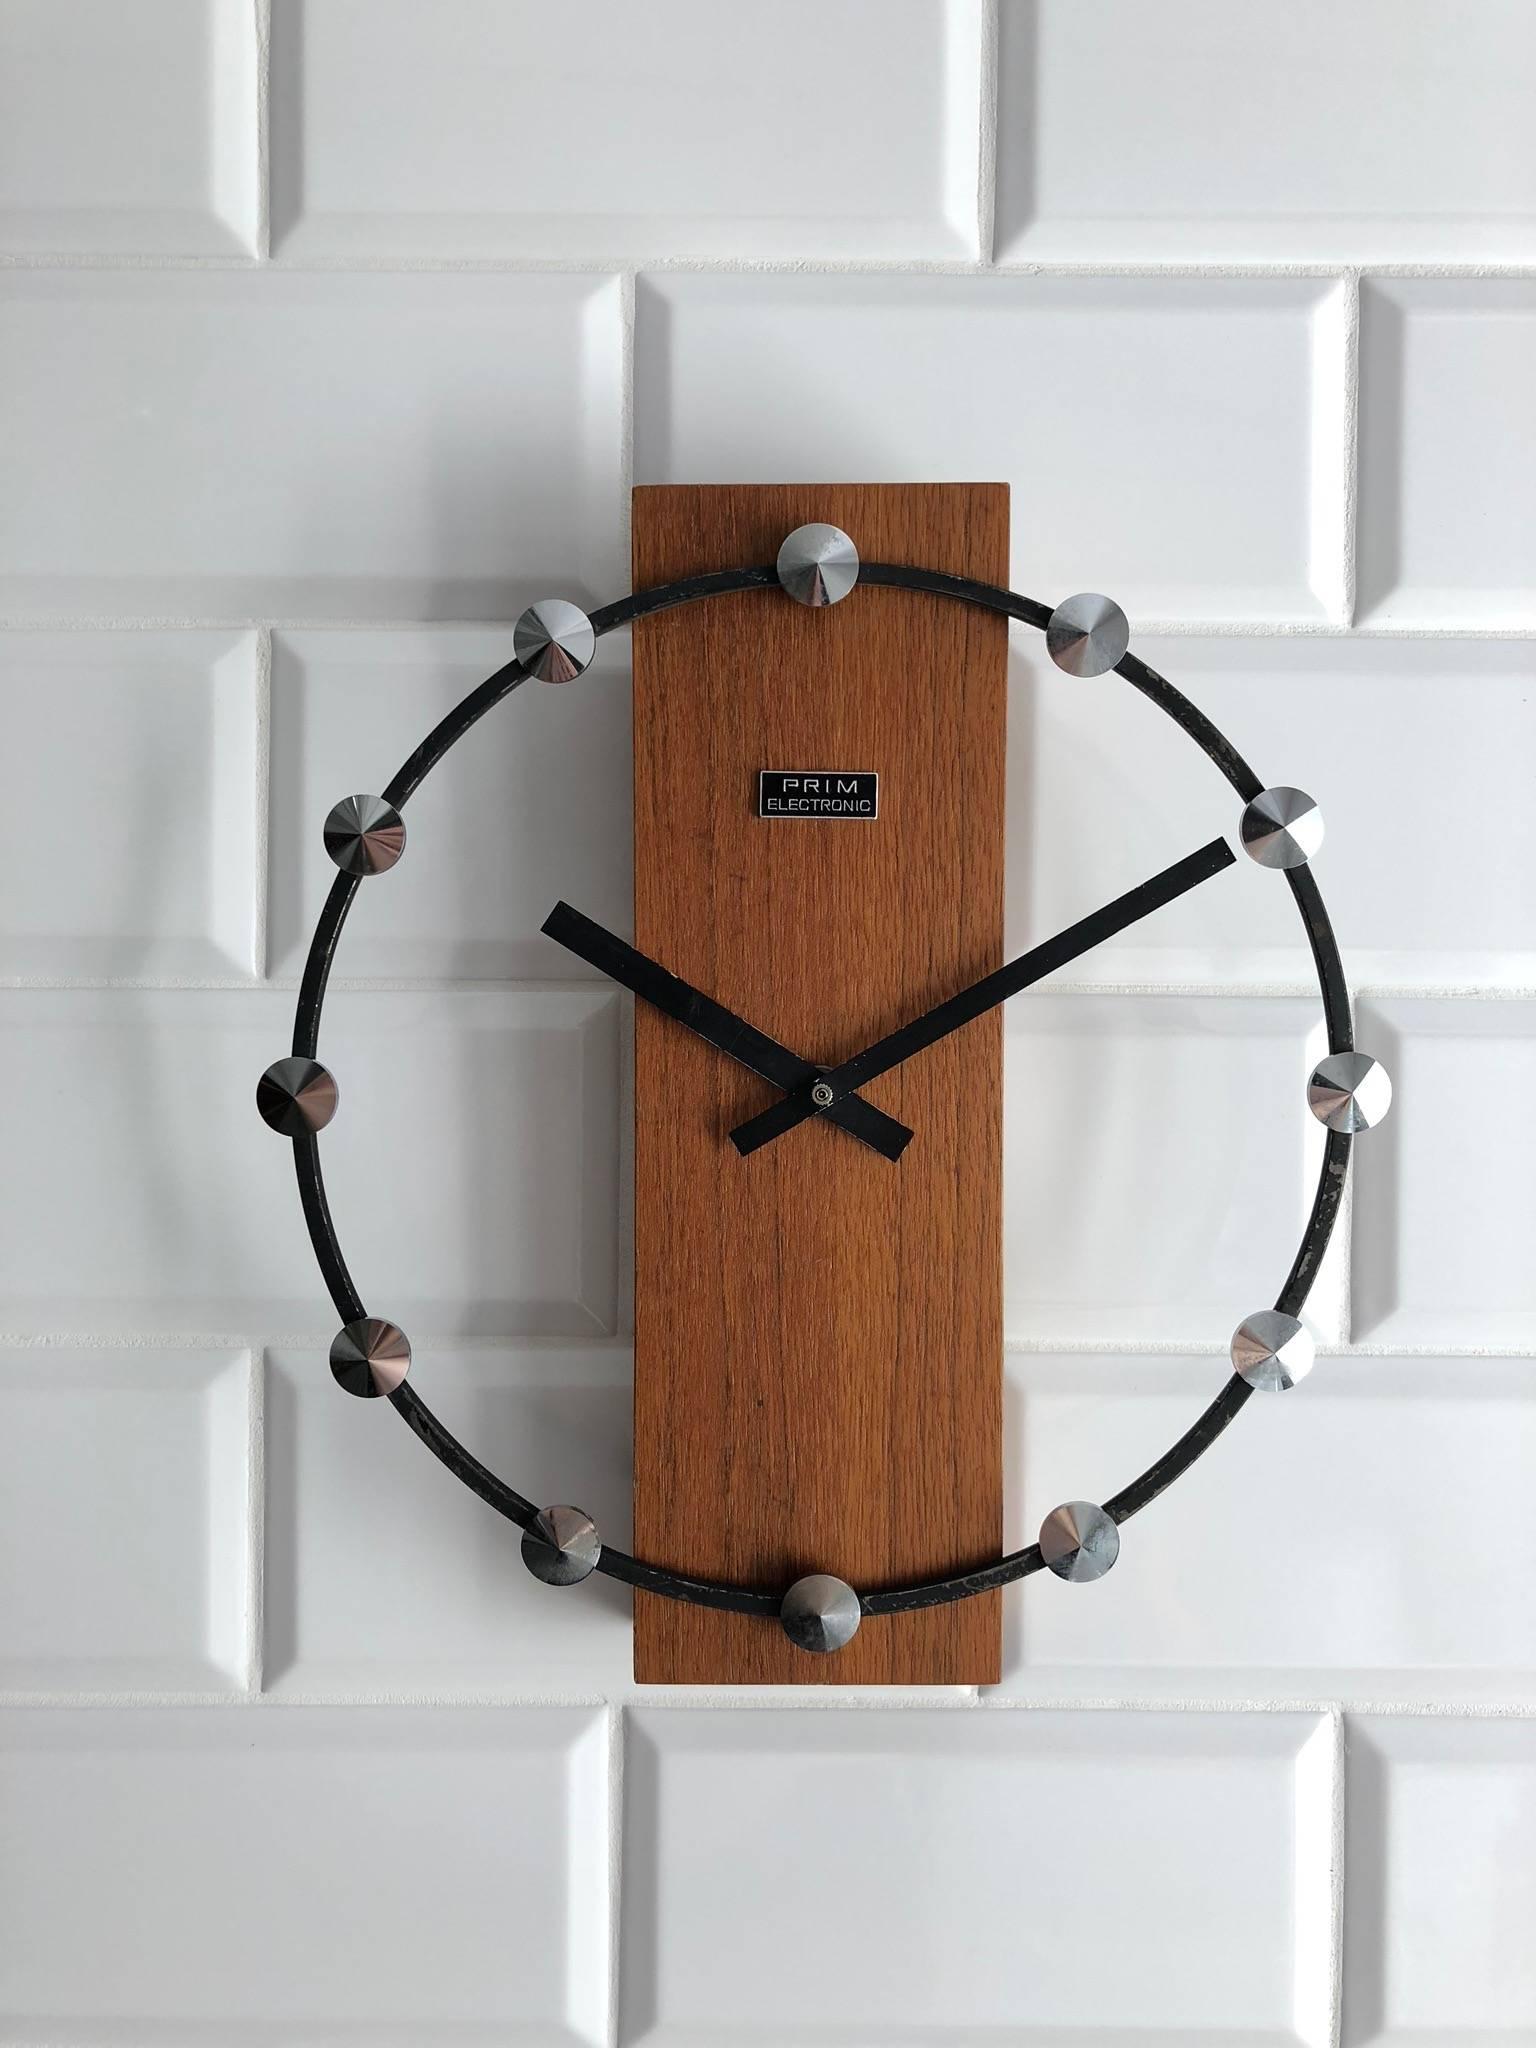 Midcentury Wall Clock by Prim 2